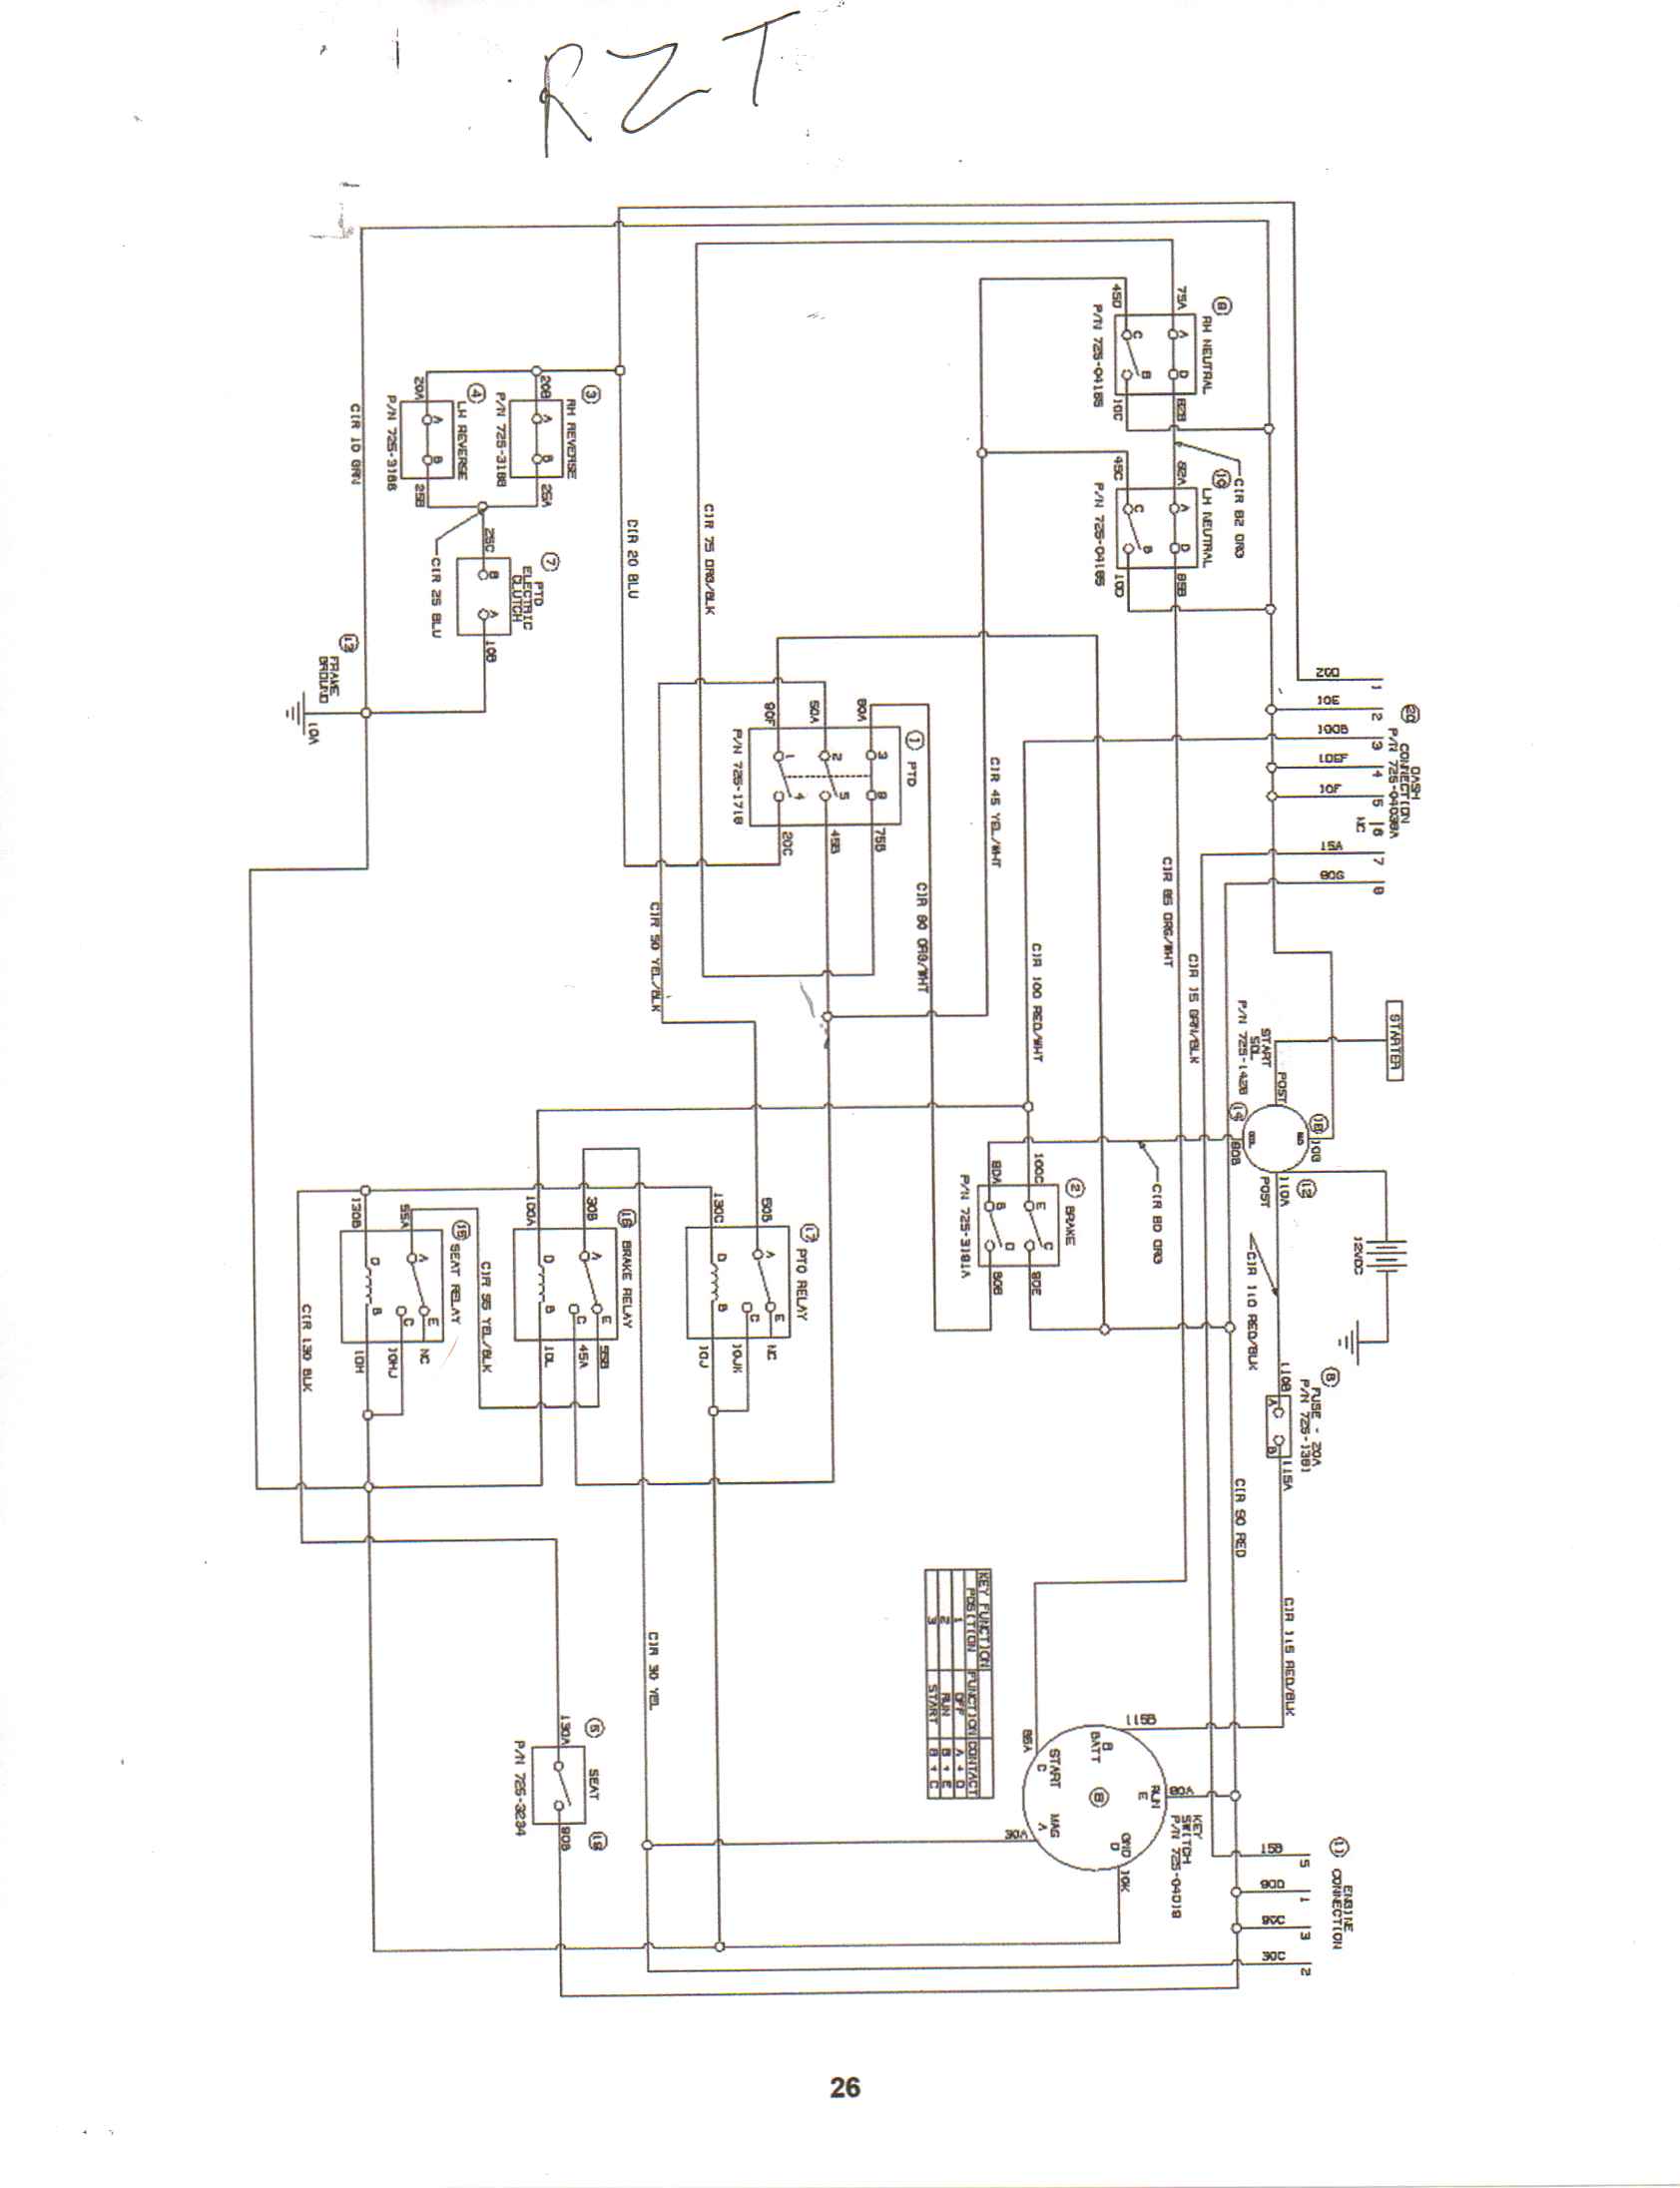 1962 cub cadet wiring diagram